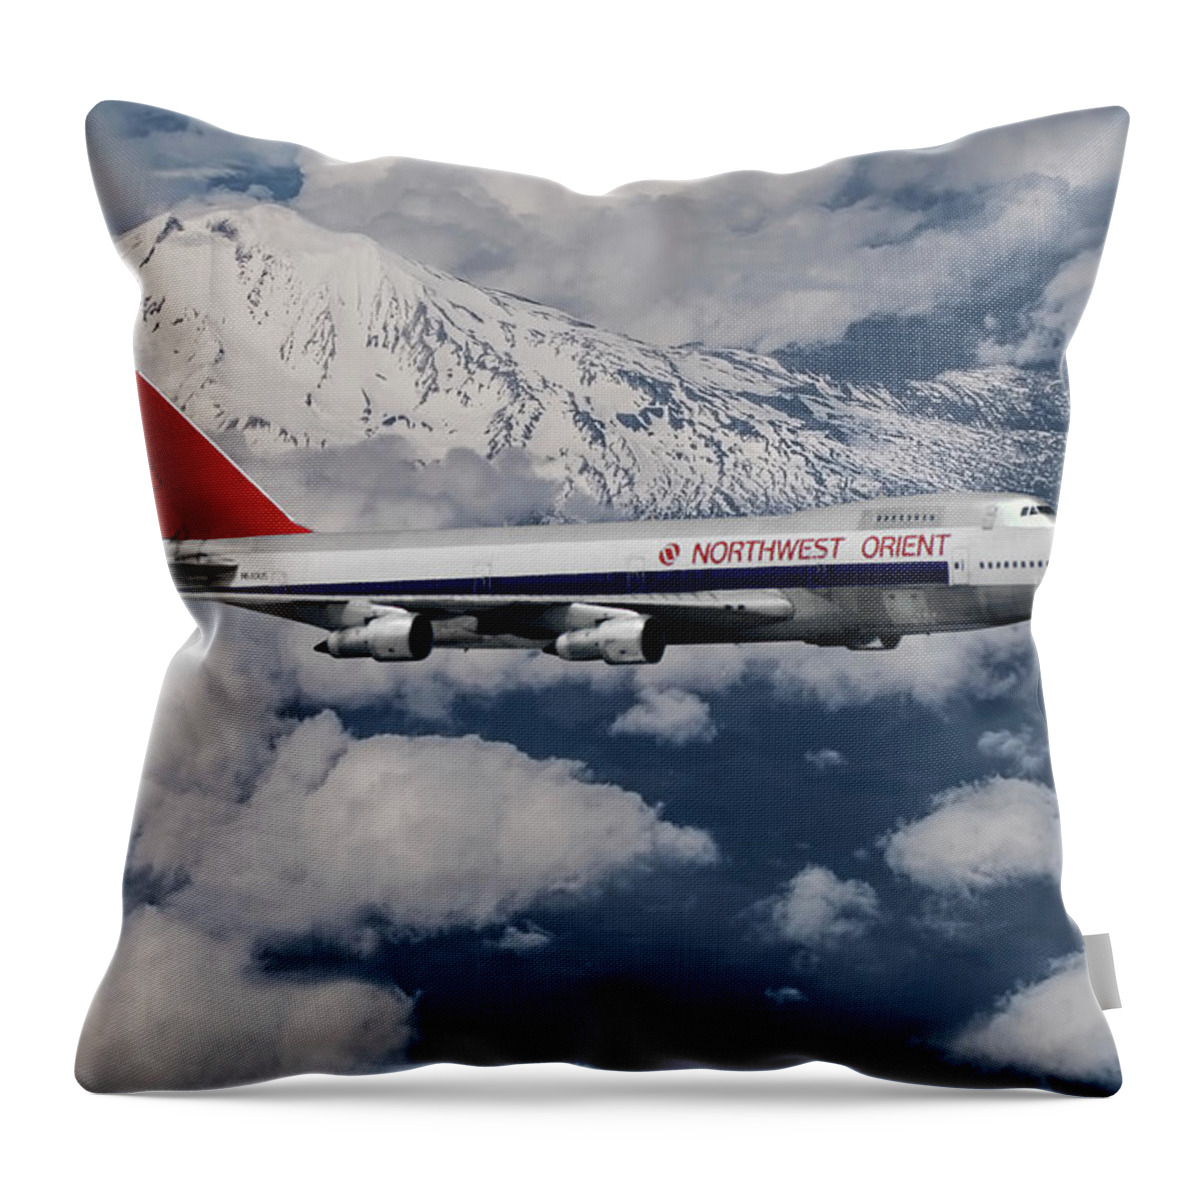 Northwest Orient Airlines Throw Pillow featuring the mixed media Northwest Orient Airlines Boeing 747 and Mt. Rainier by Erik Simonsen